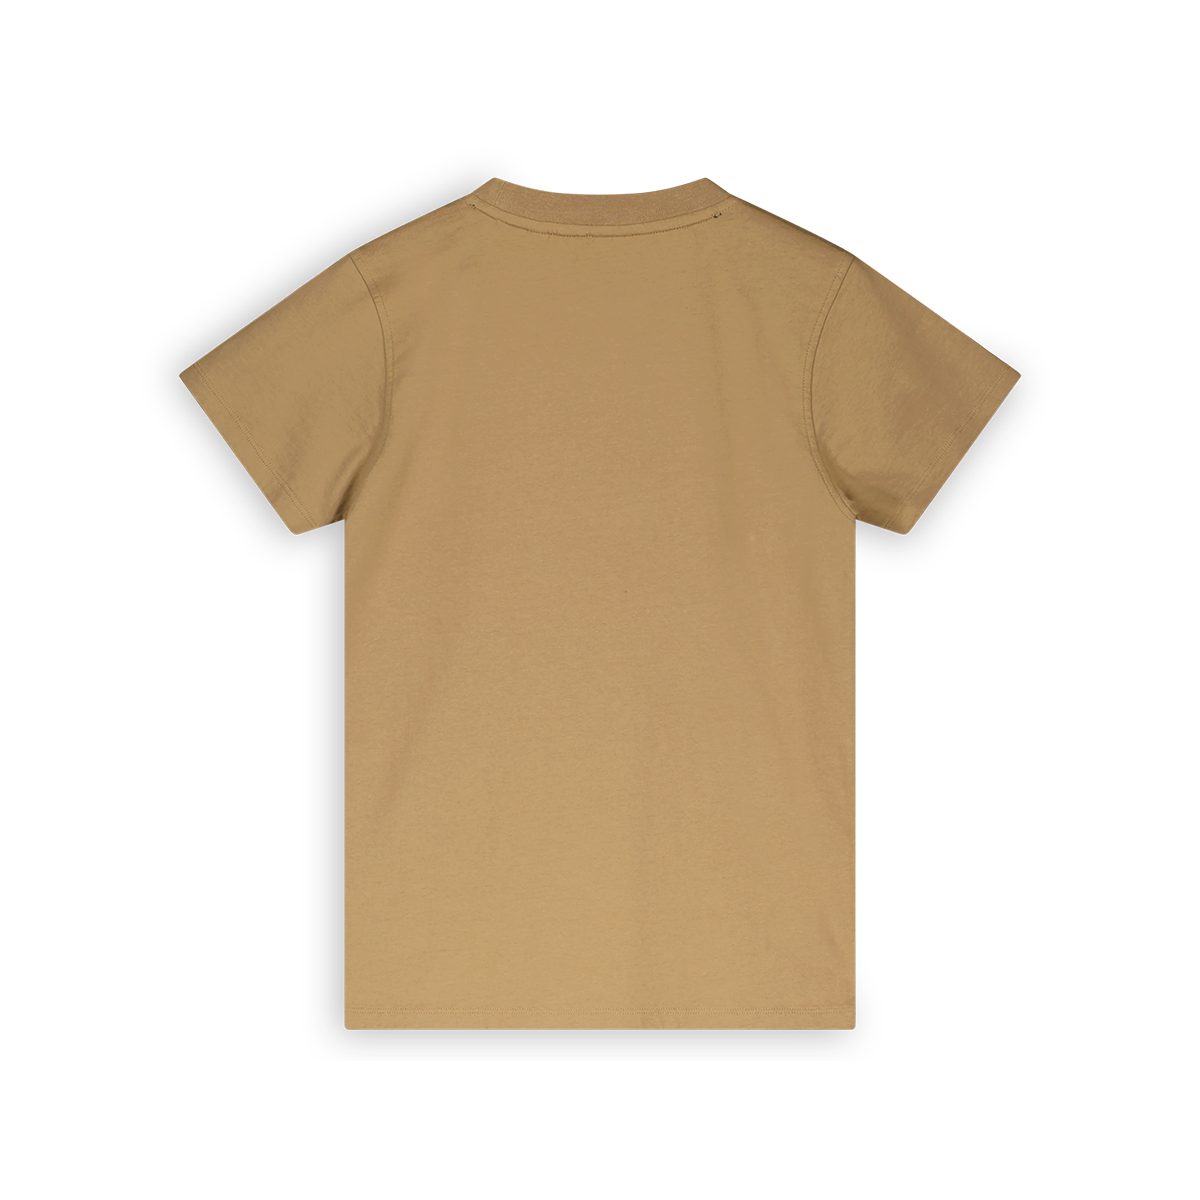 717 T-shirt Sand